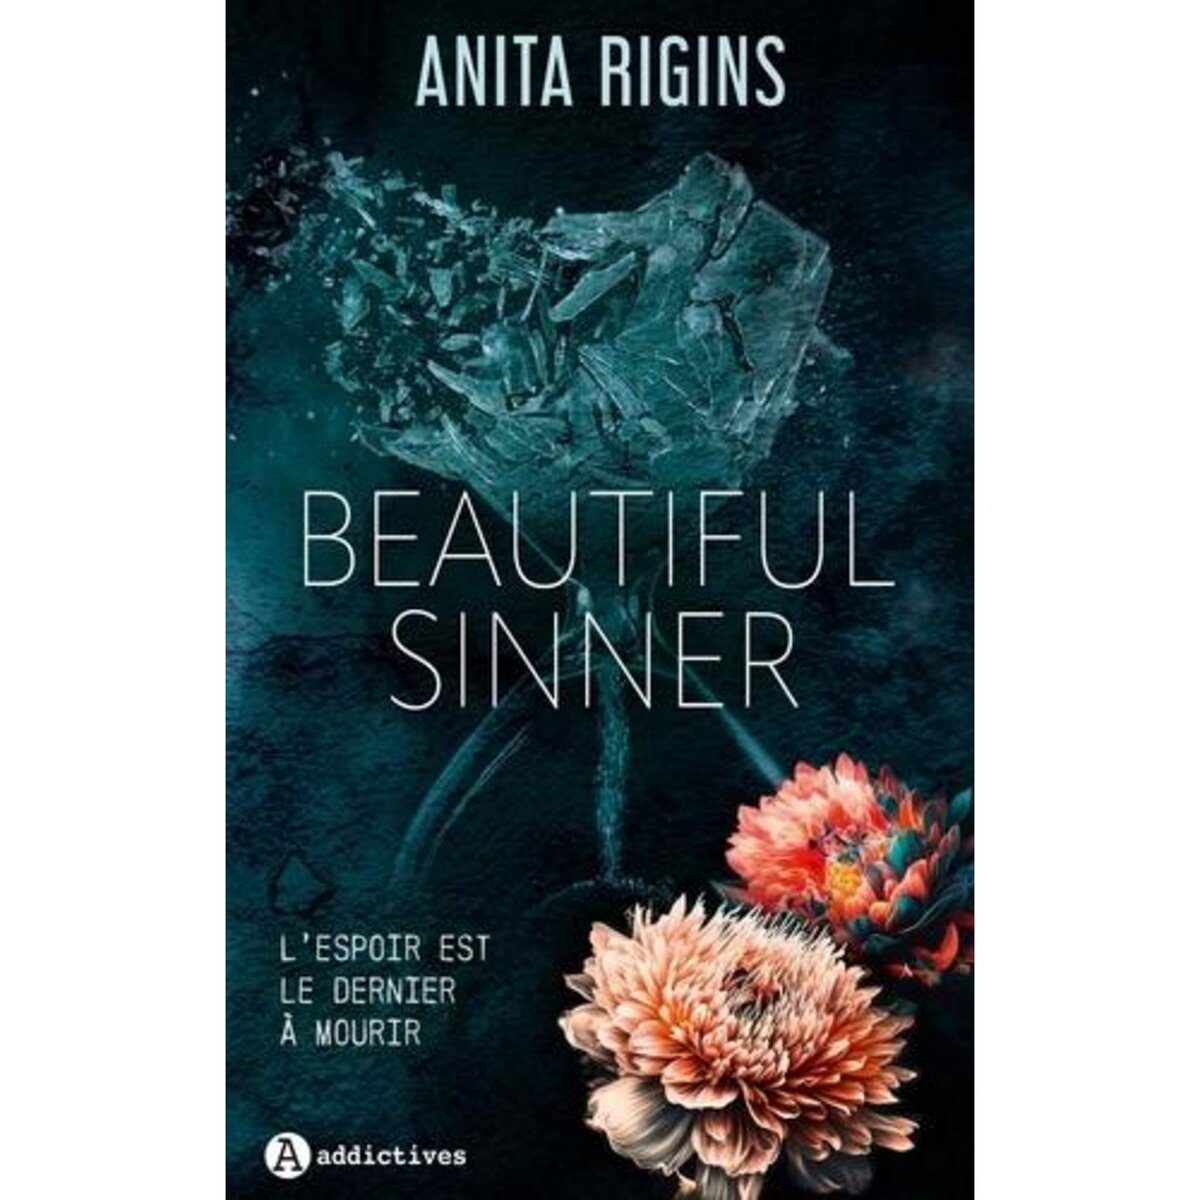  BEAUTIFUL SINNER, Rigins Anita